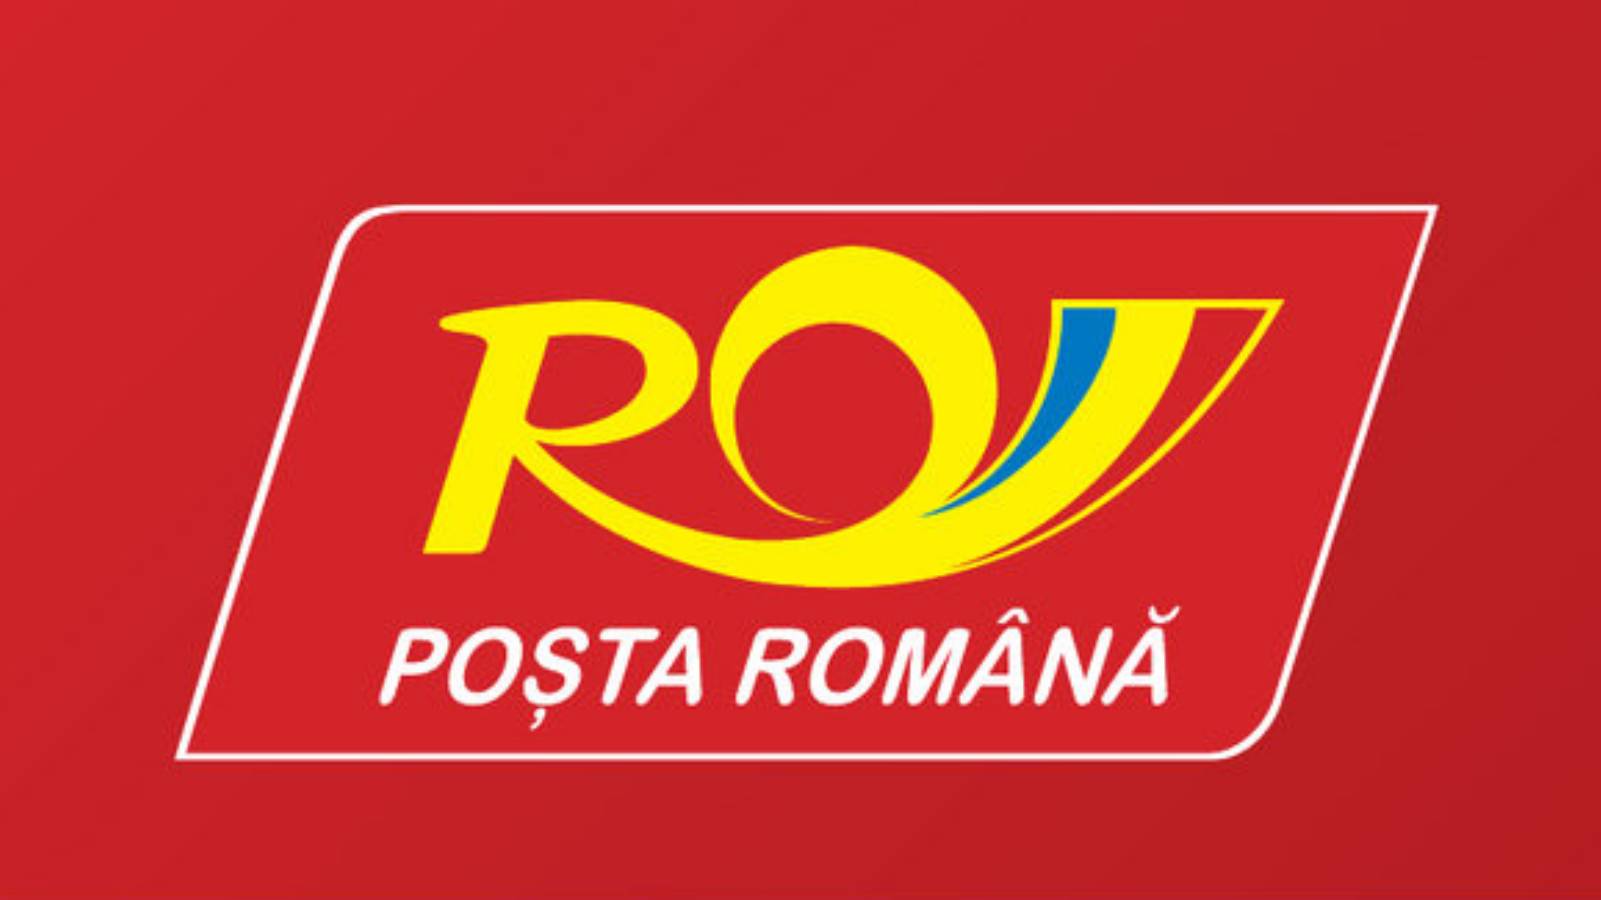 Assicurazione pacchi postali rumeni